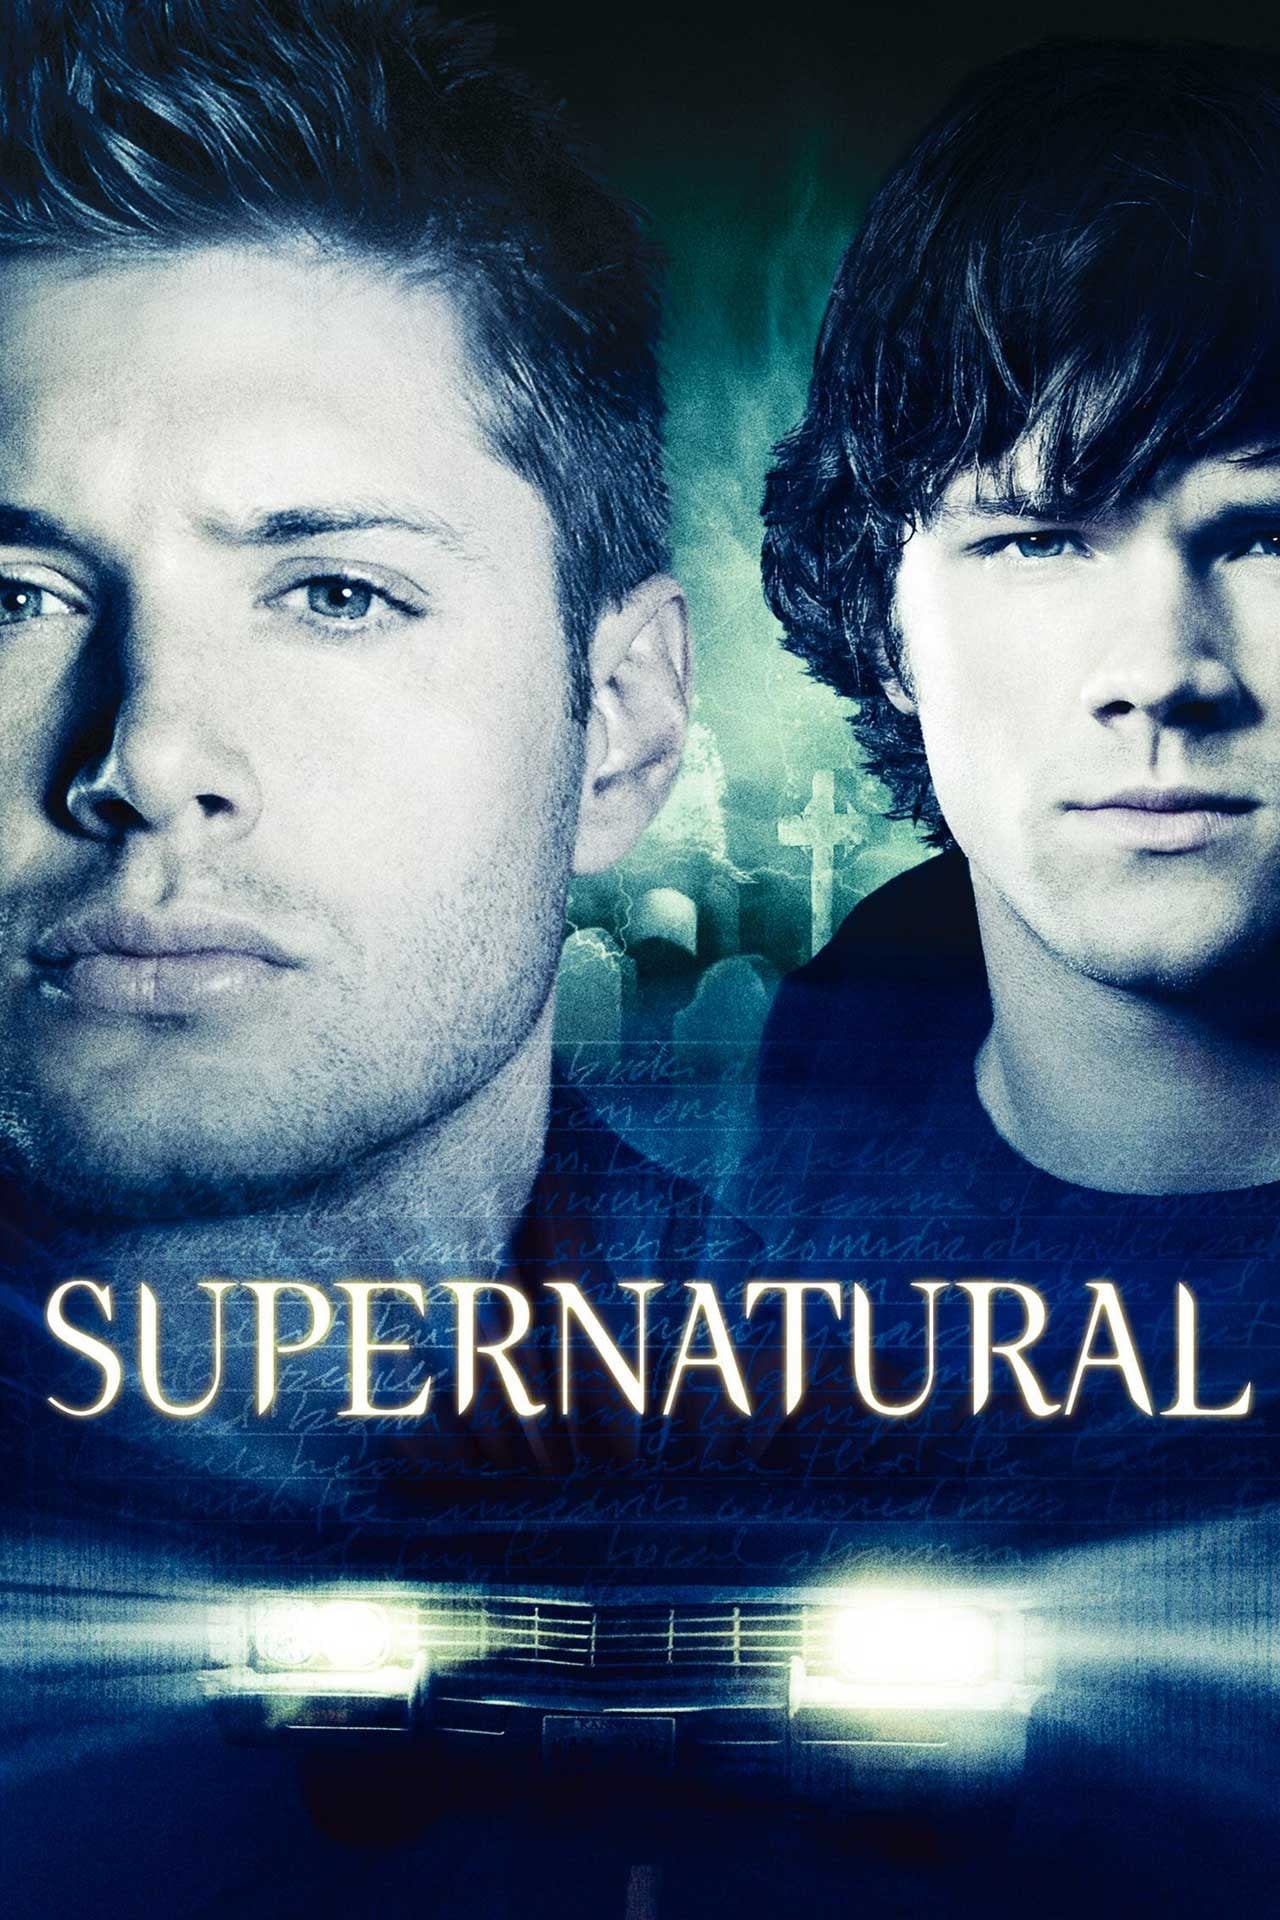 Supernatural ล่าปริศนาเหนือโลก Season 2